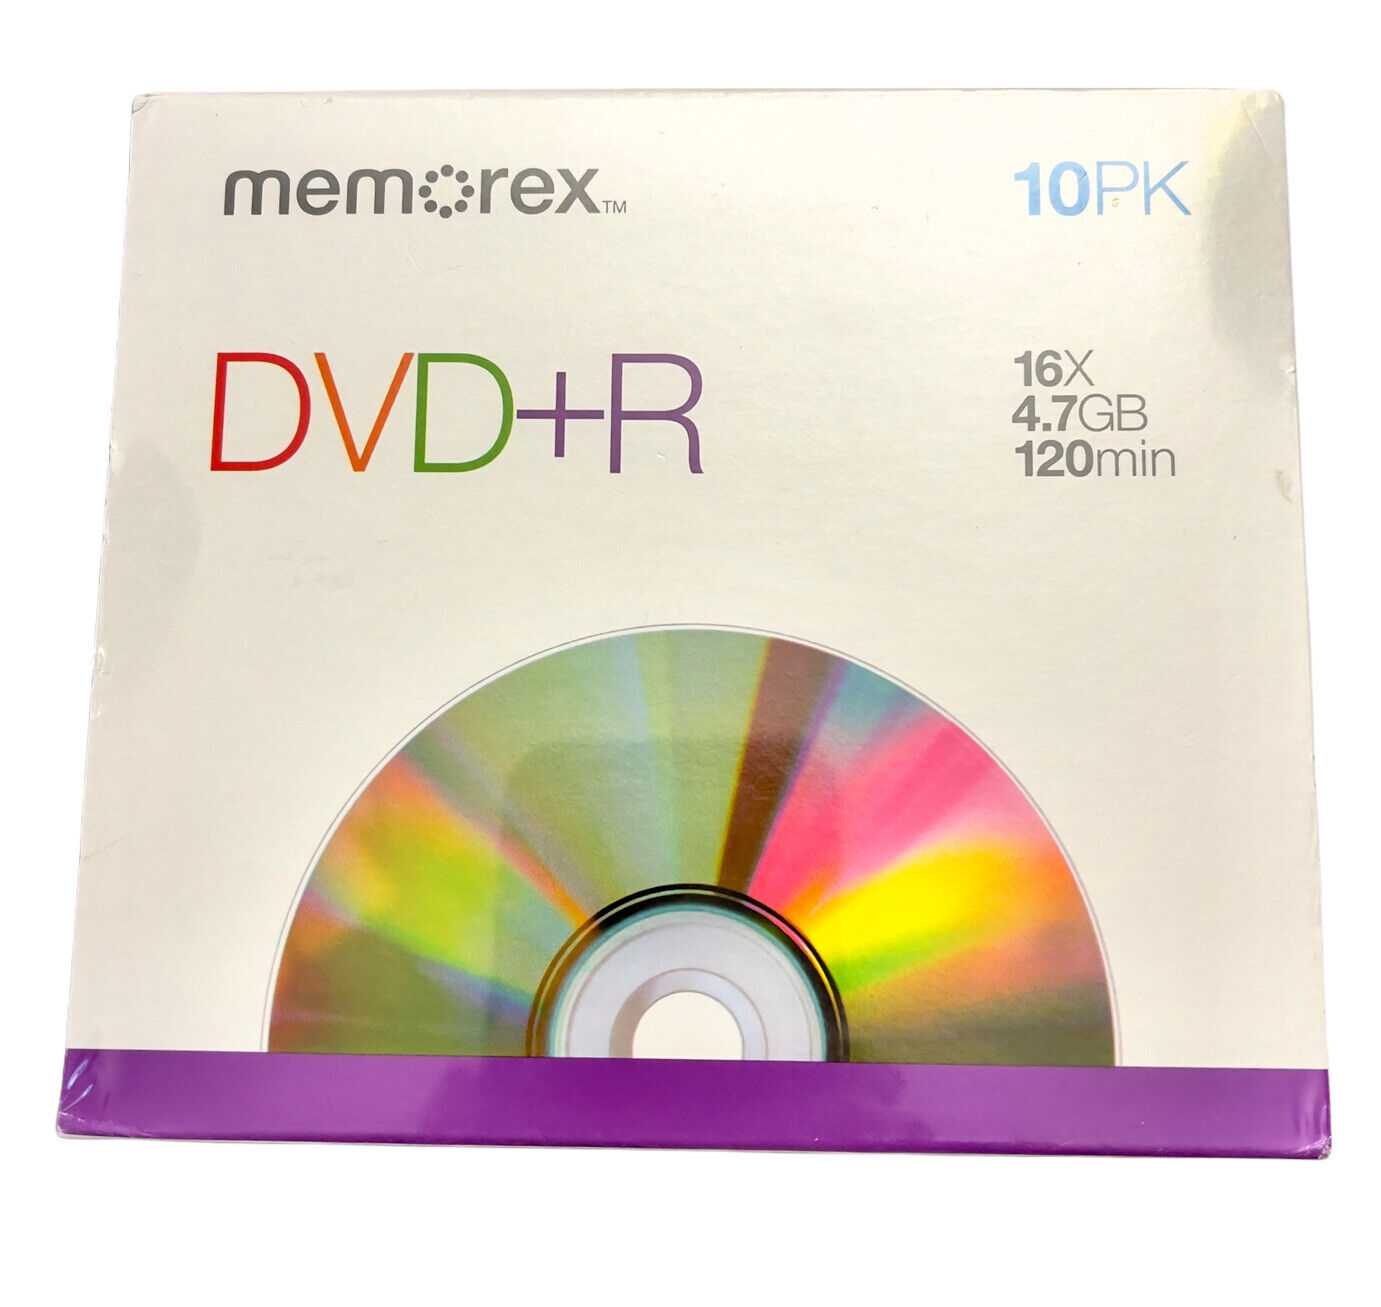 MEMOREX DVD+R 10PK 16X 4.7GB 120min.NEW SEALED.